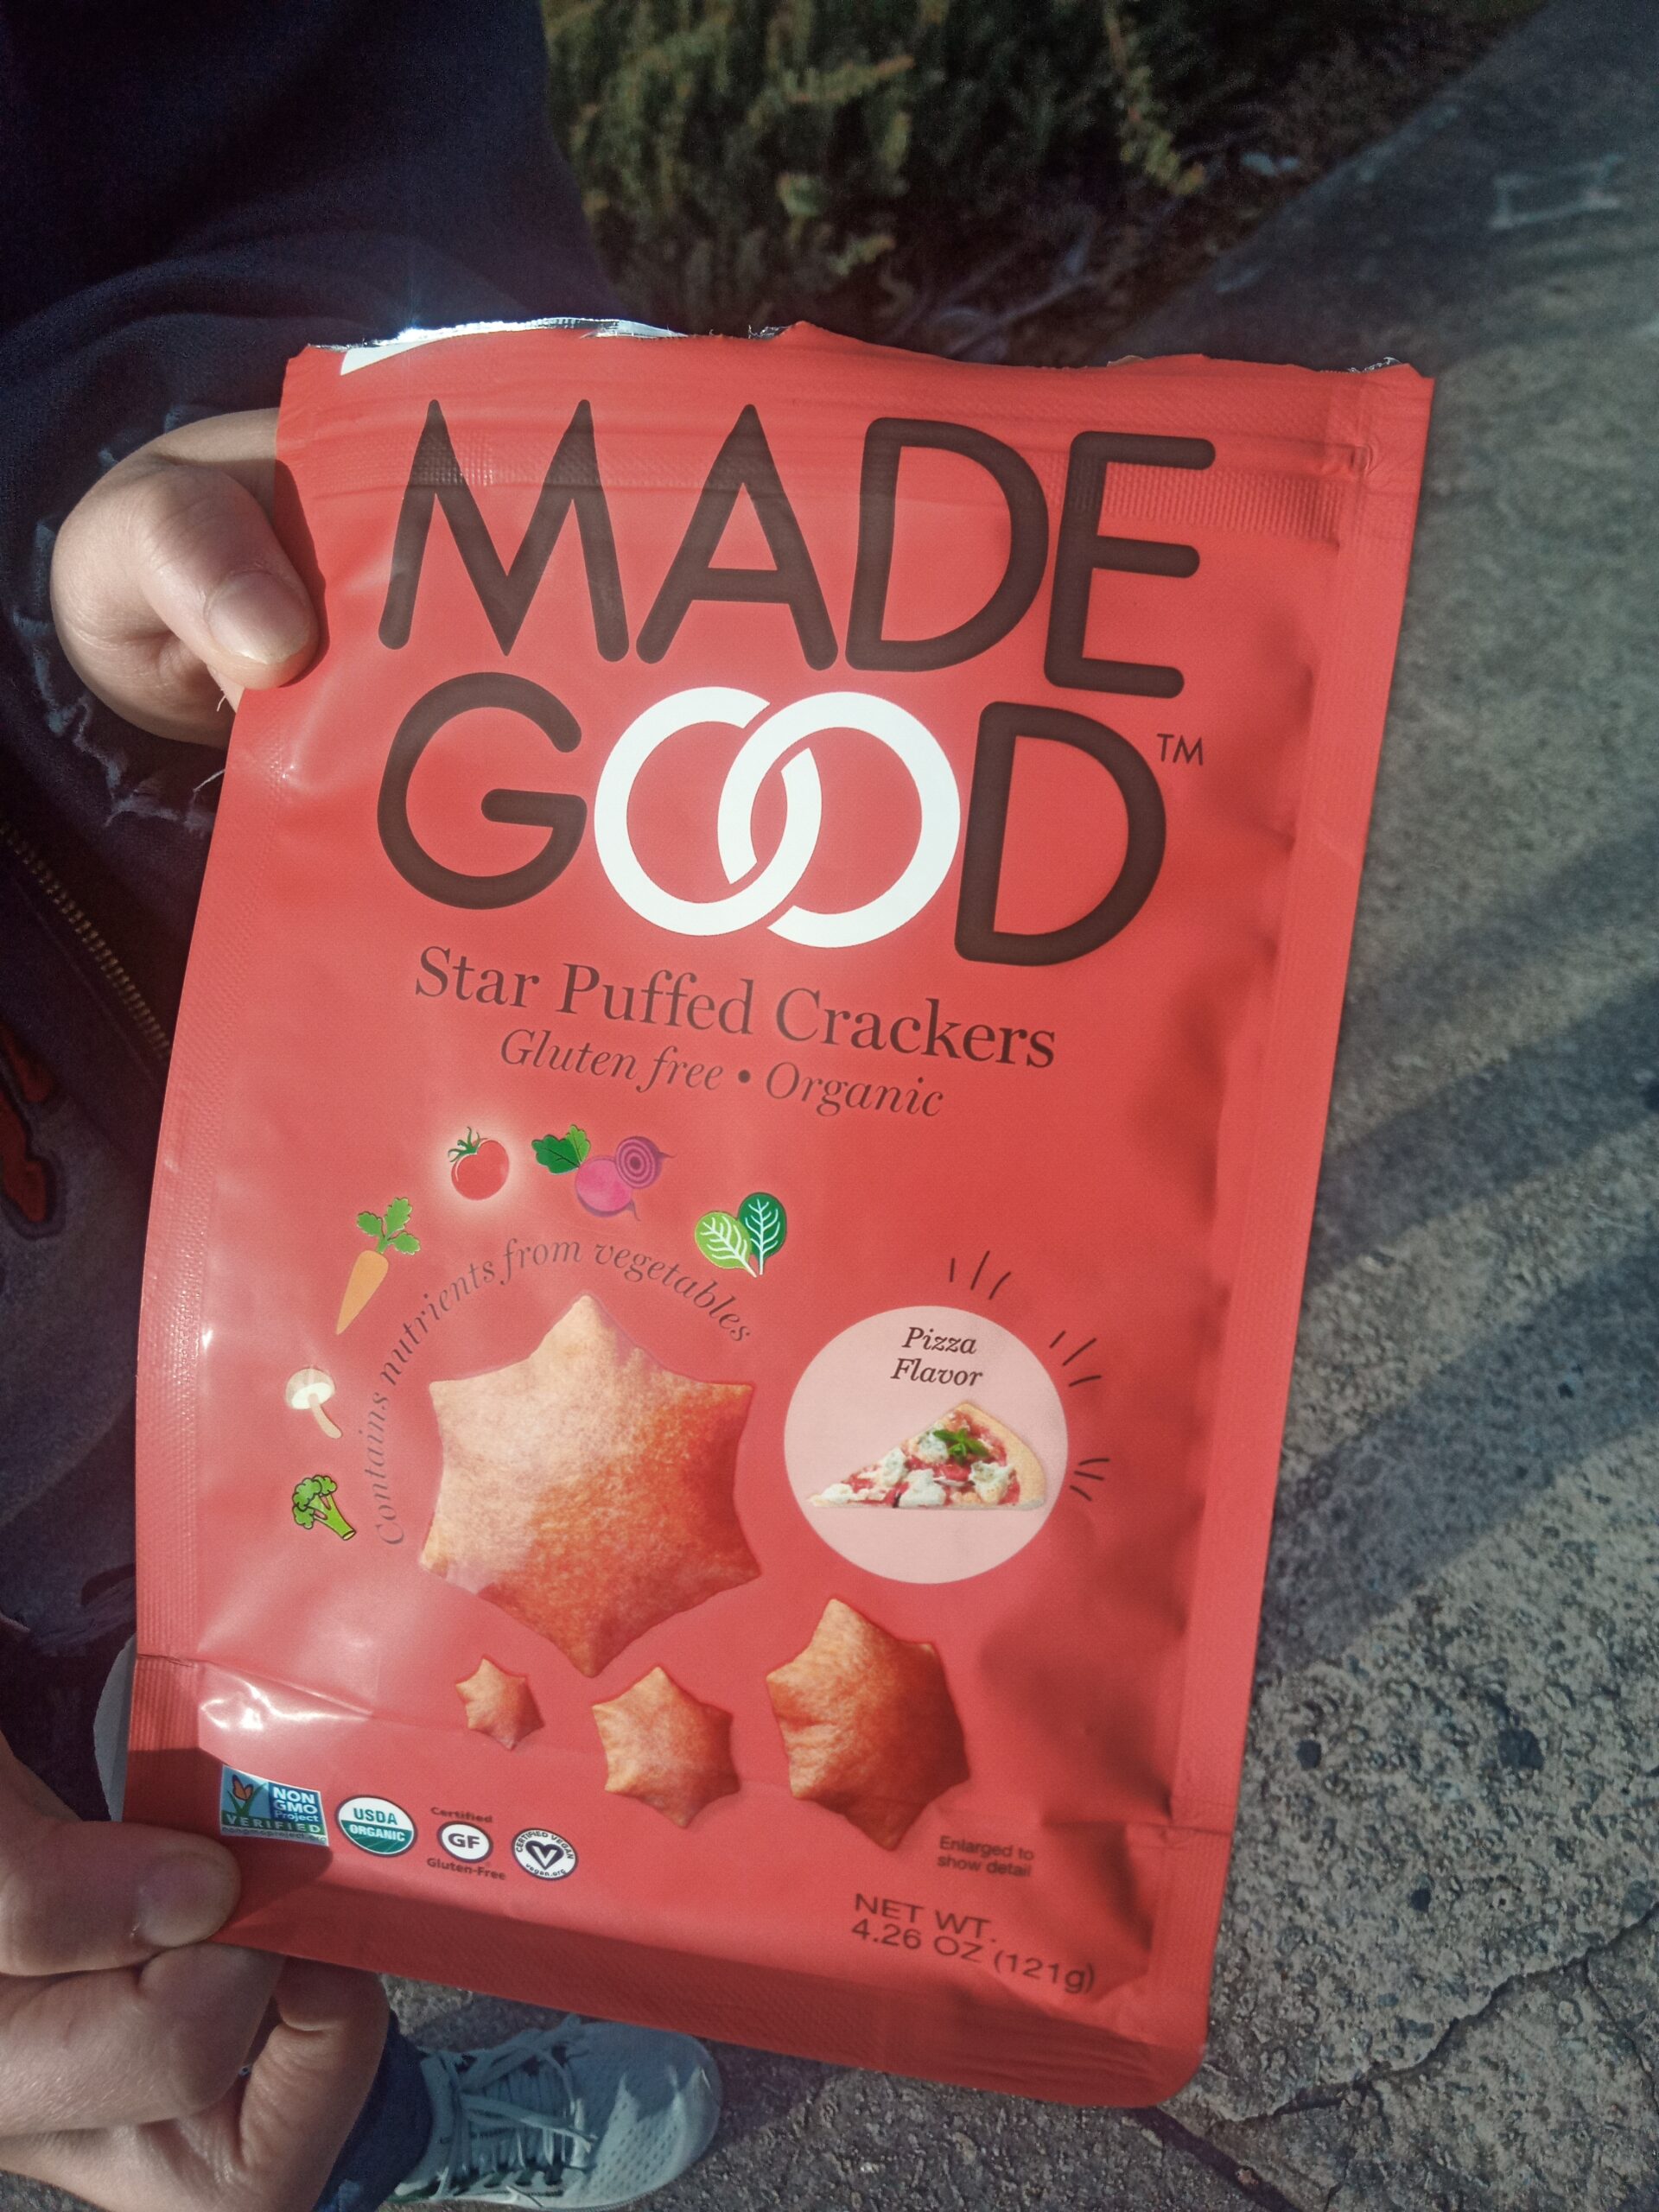 Made Good “Star Puffed Crackers – Pizza Flavor”: 4.5/5 yermy stars!